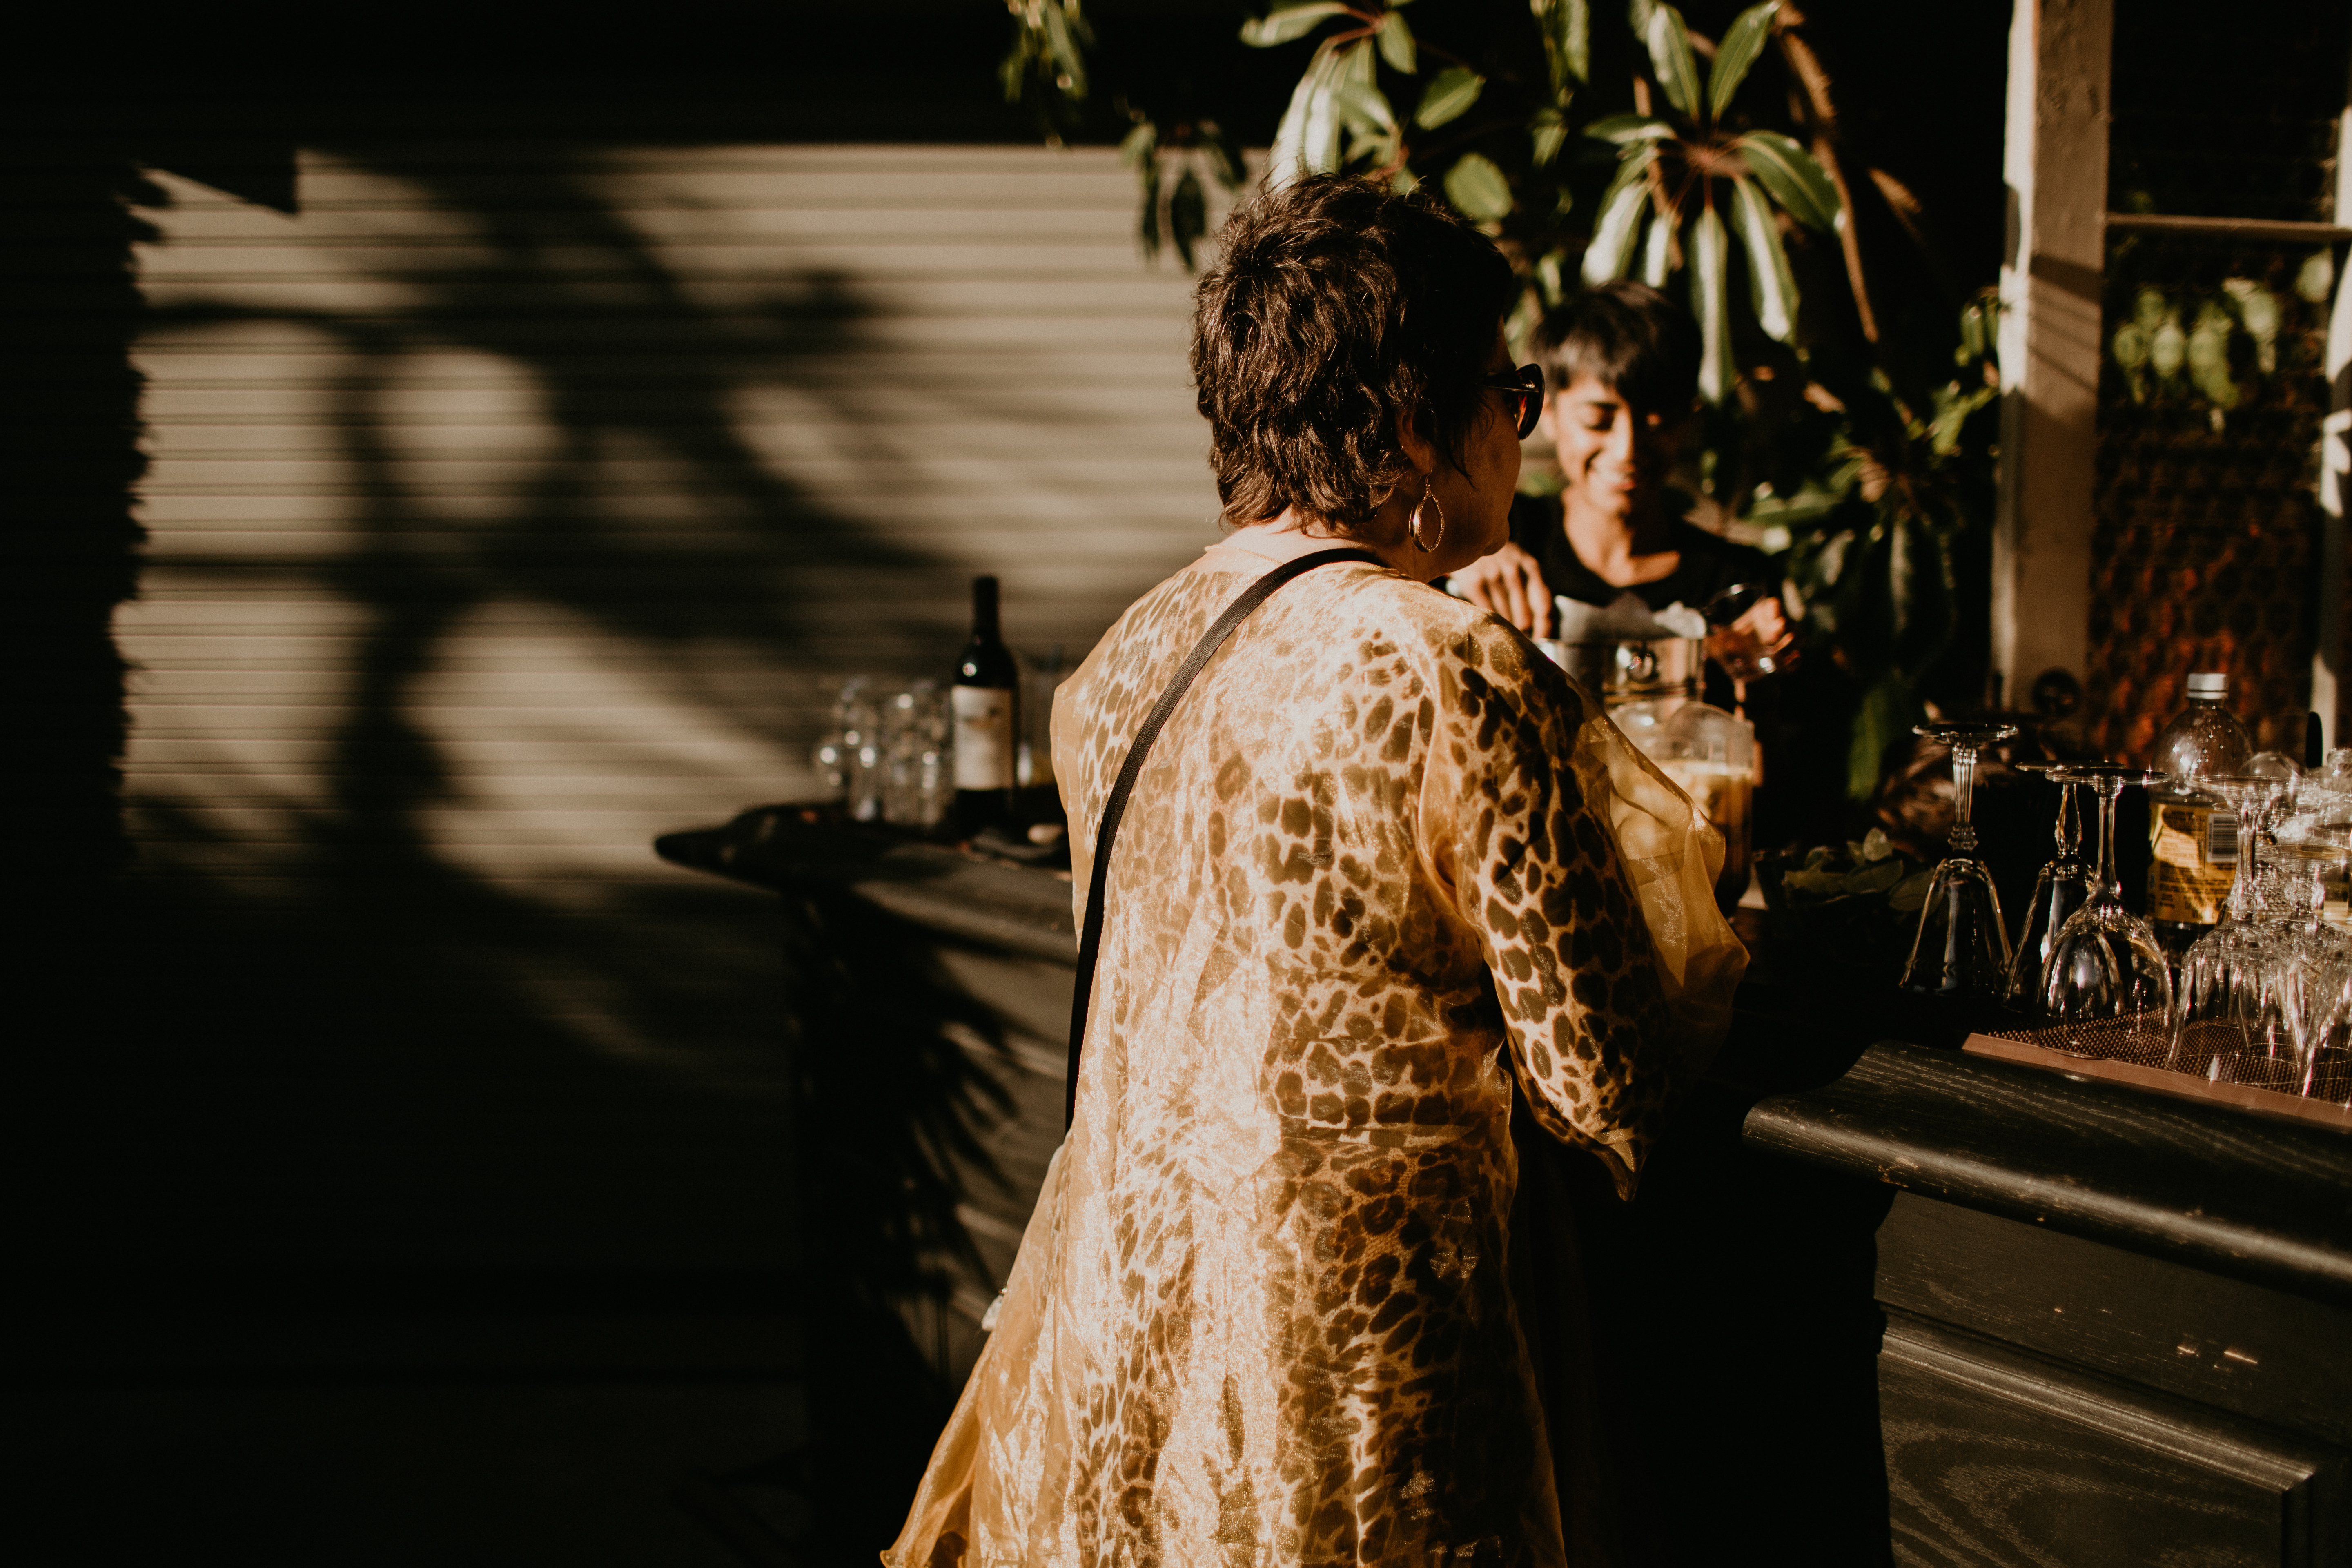 A modern romantic and edgy wedding at the smog shoppe by Los Angeles Wedding Photographer Kadi Tobin